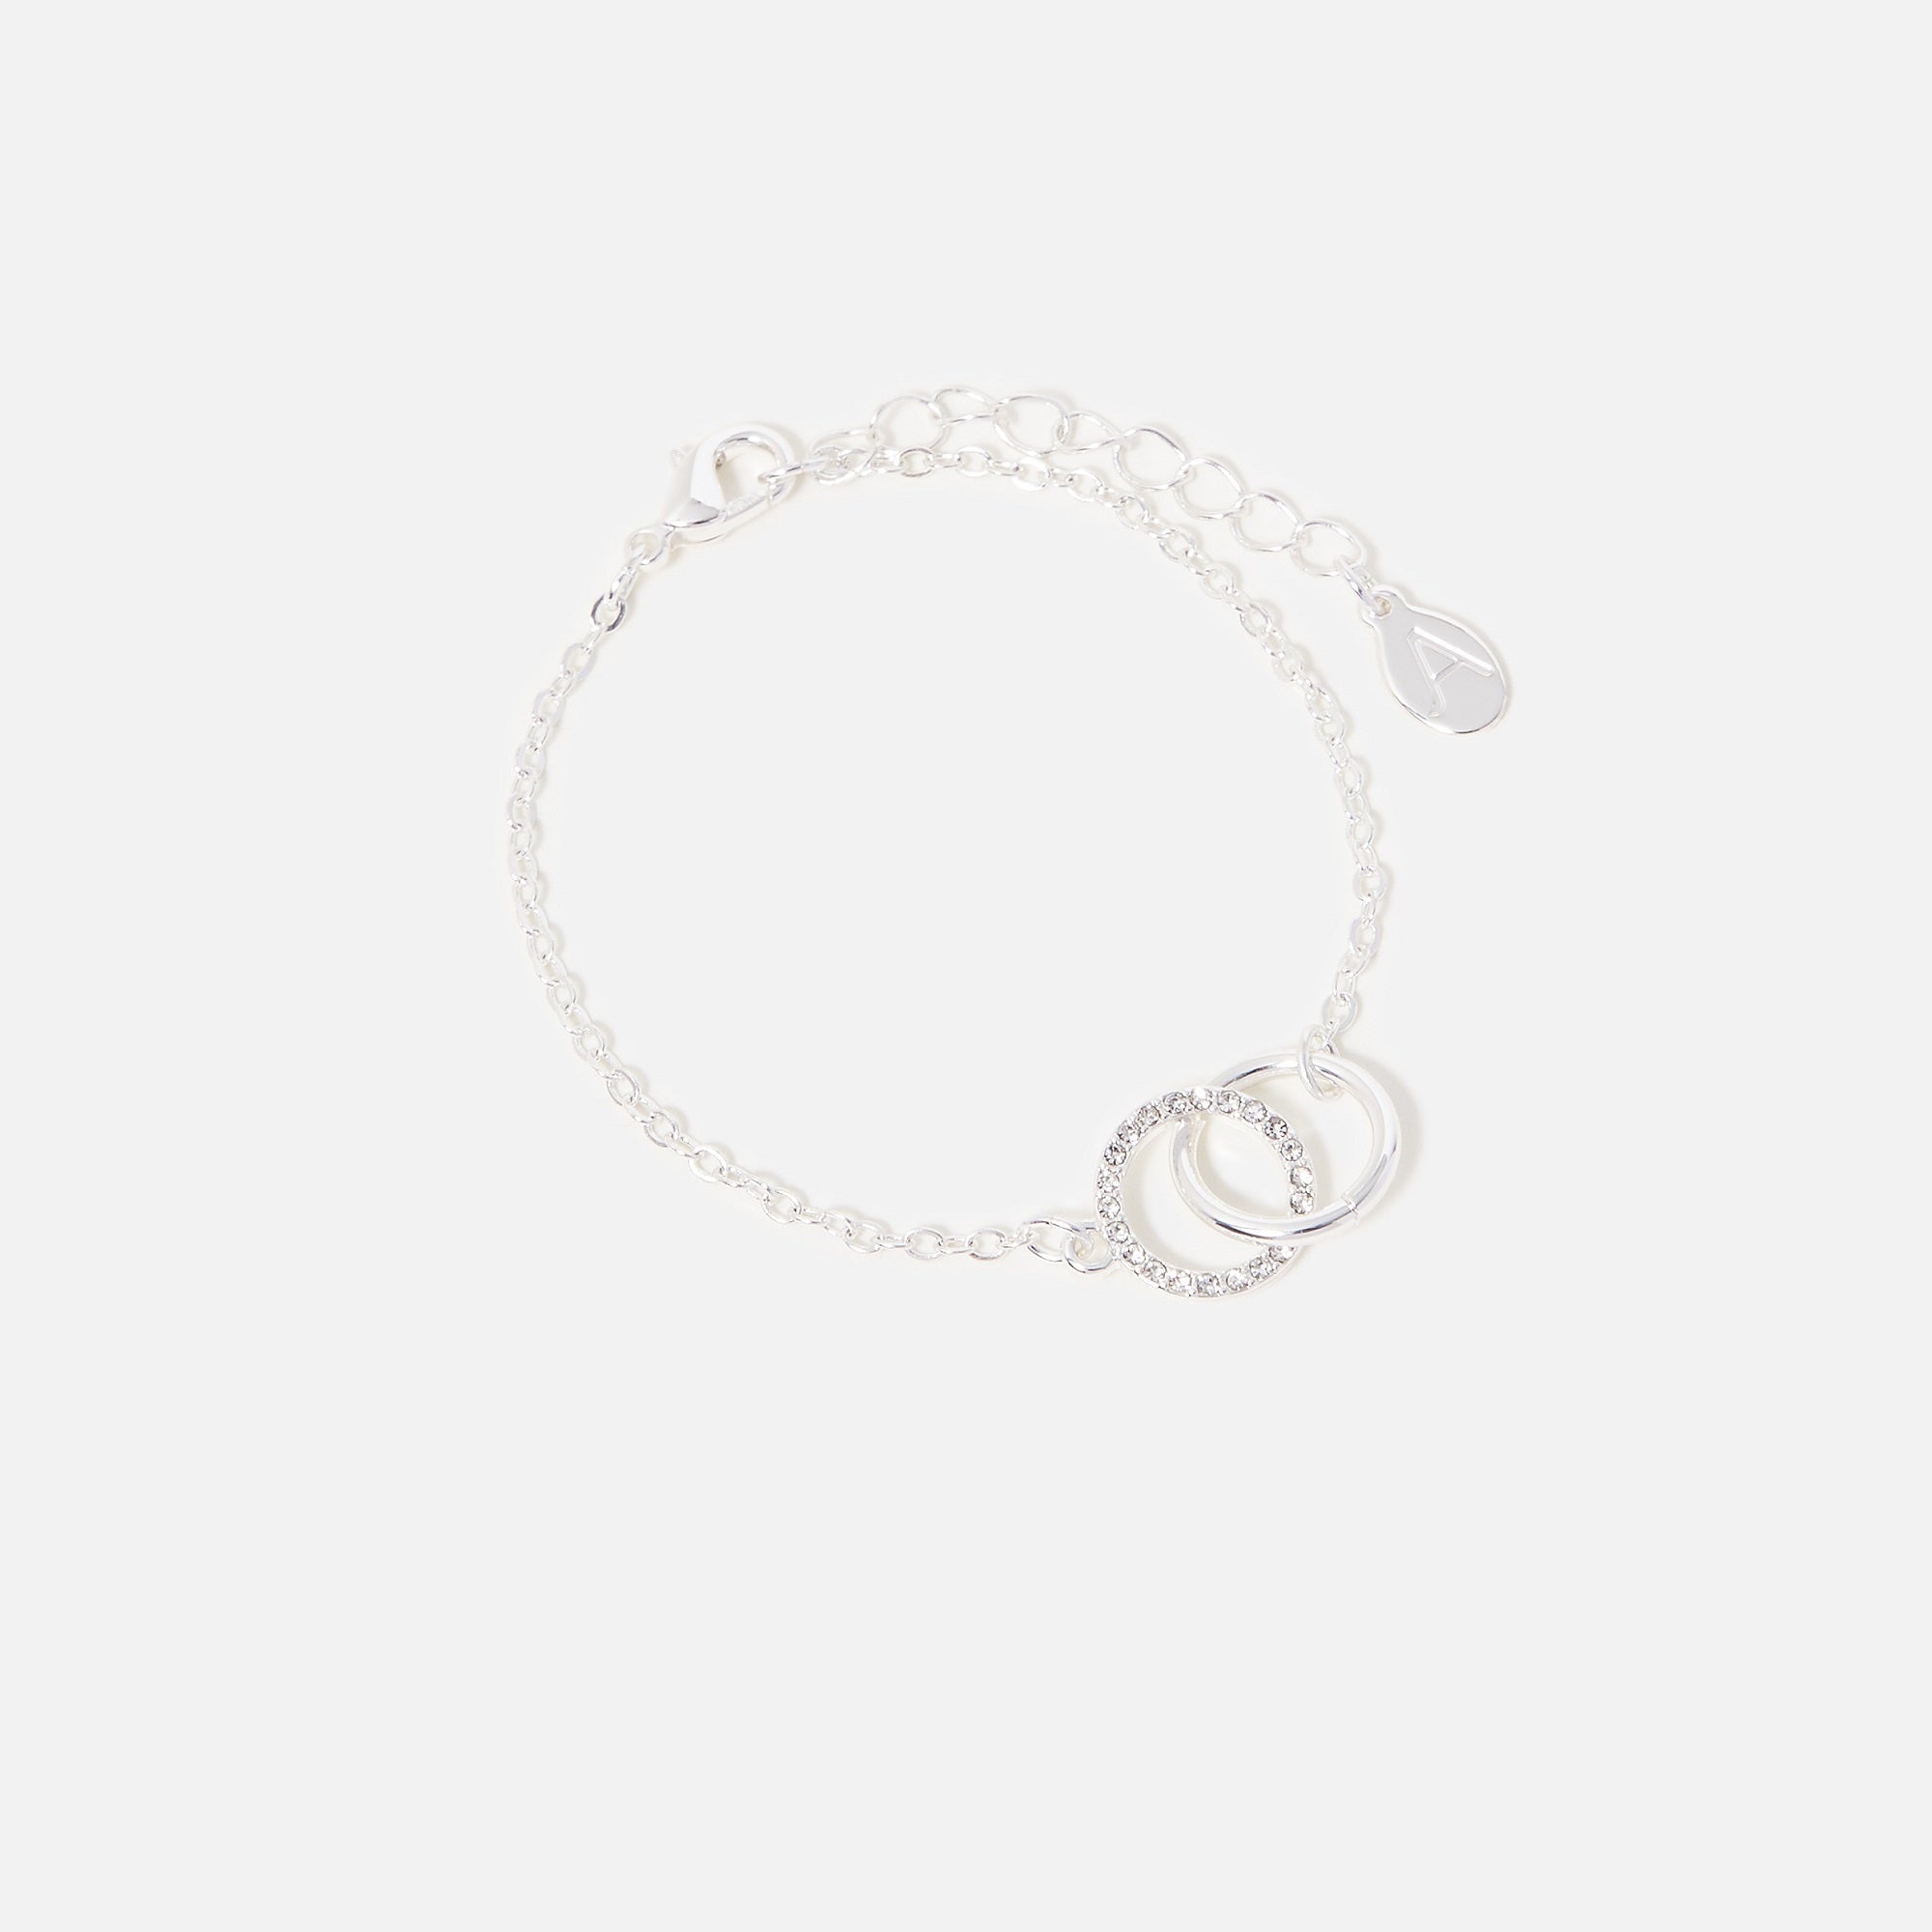 NWT! Adore signature organic circle bracelet | Circle bracelet, Sparkle  bracelet, Bracelet shops